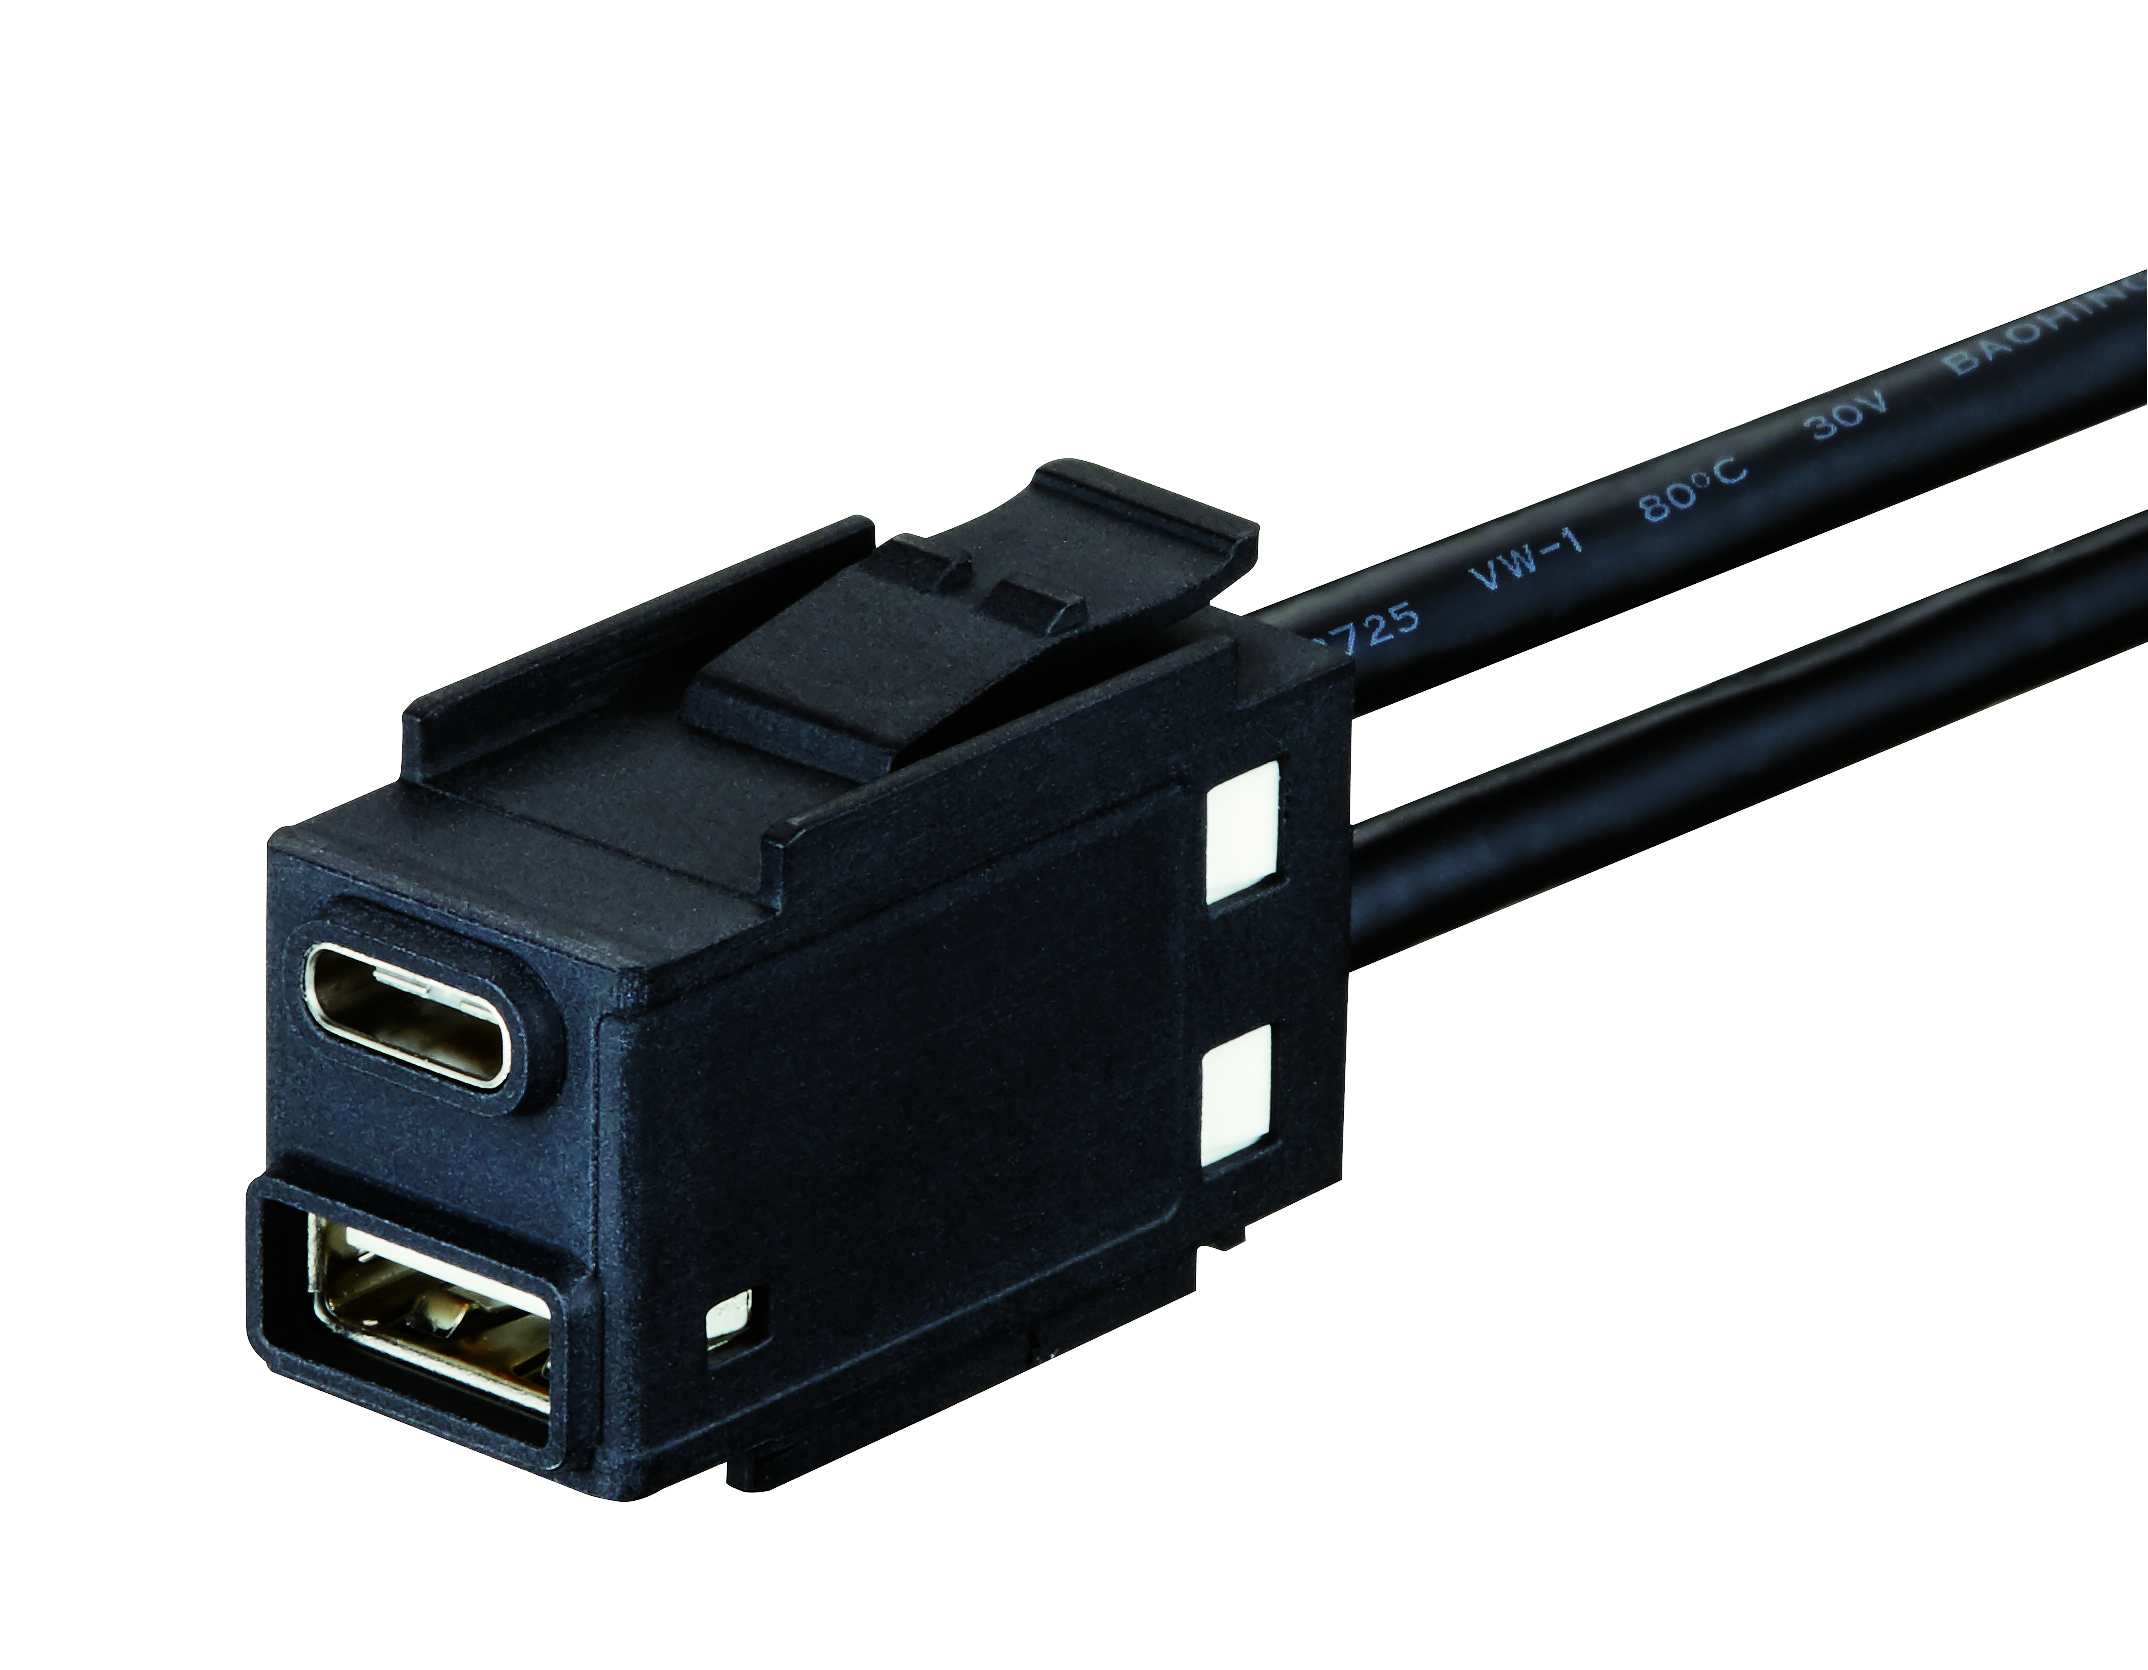 USB 2.0 Standard-A Socket and USB 2.0 Type-C